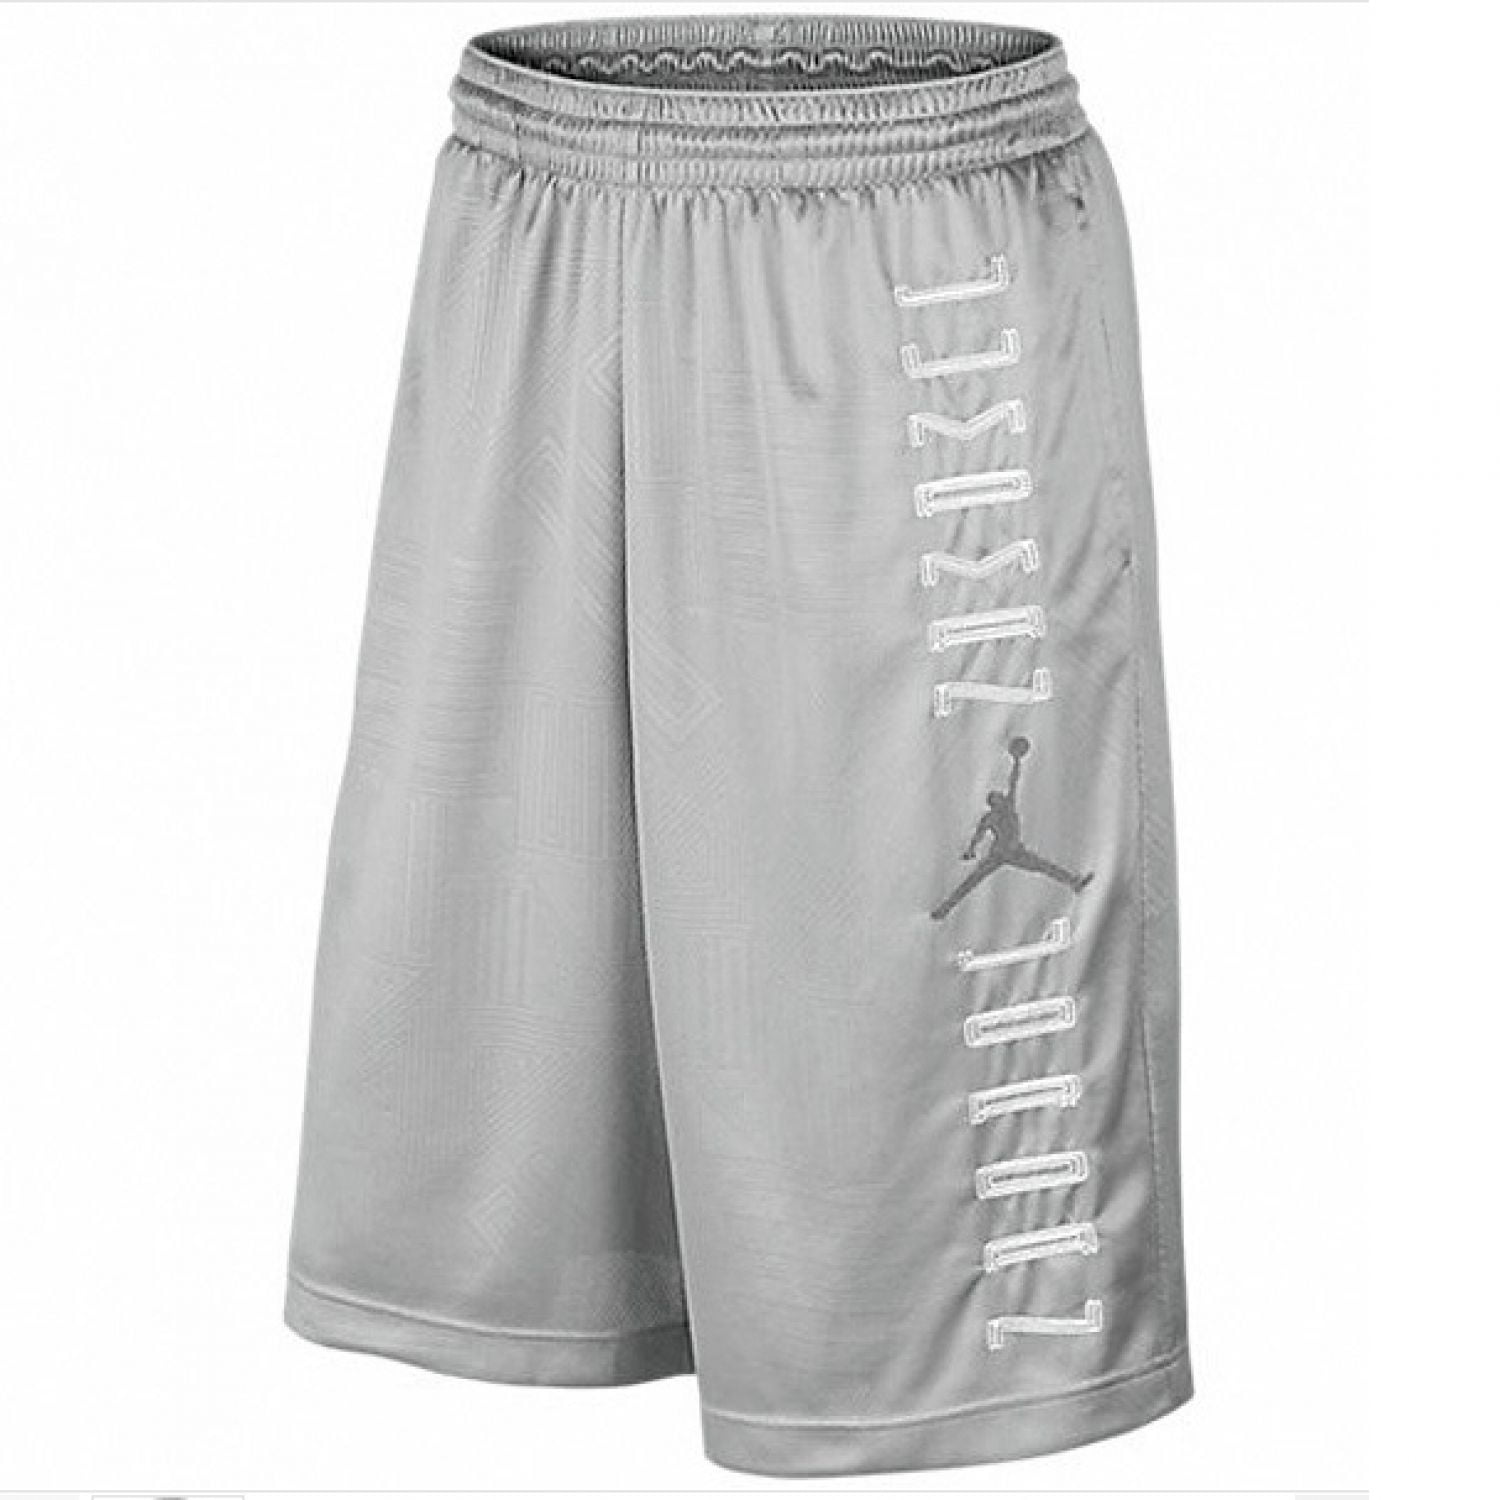 Jordan Mens Aj Xi Basketball Shorts Light Grey S - Walmart.com